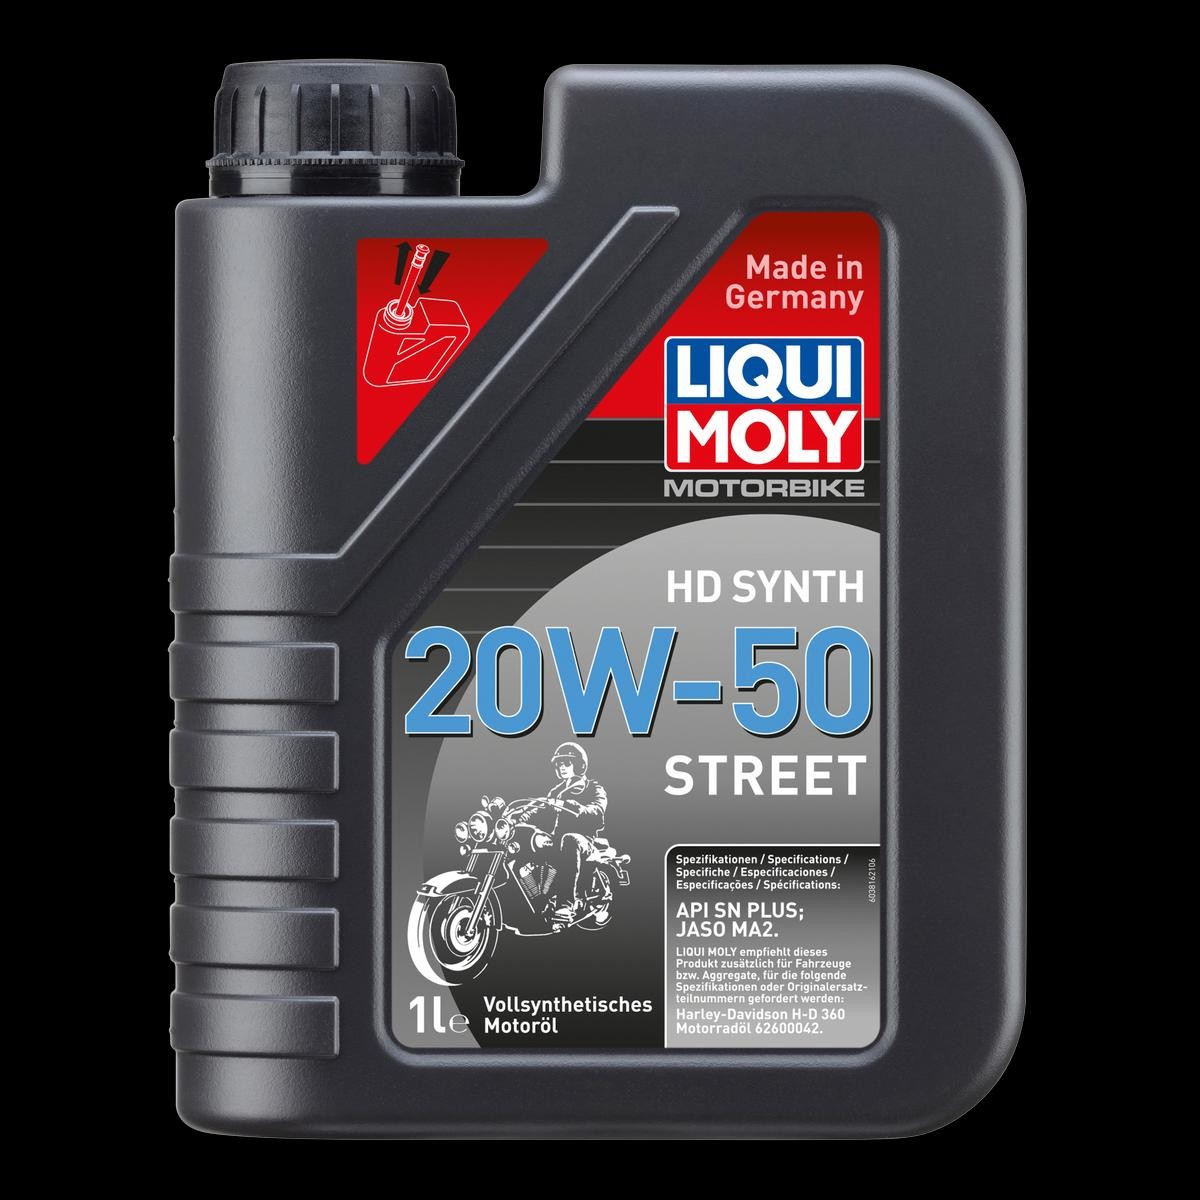 LIQUI MOLY Motorbike, HD Synth Street 20W-50, 1l, Mineral Oil Motor oil 3816 buy